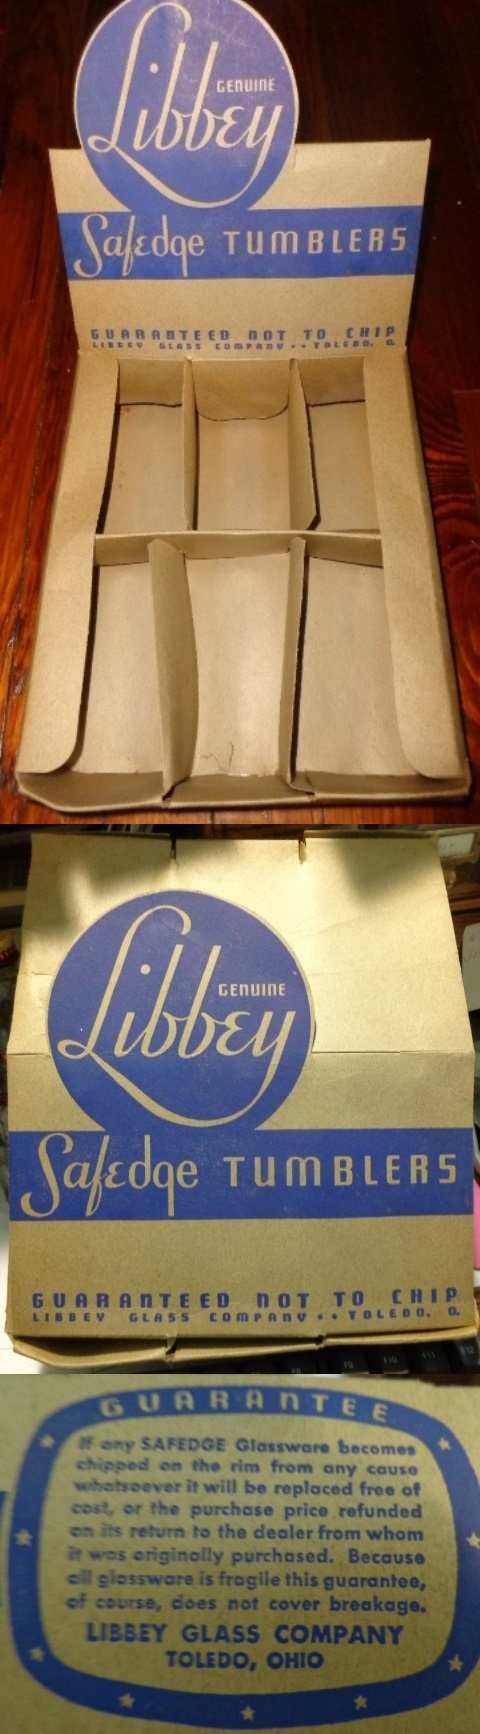 Libbey Safedge Tumblers Box